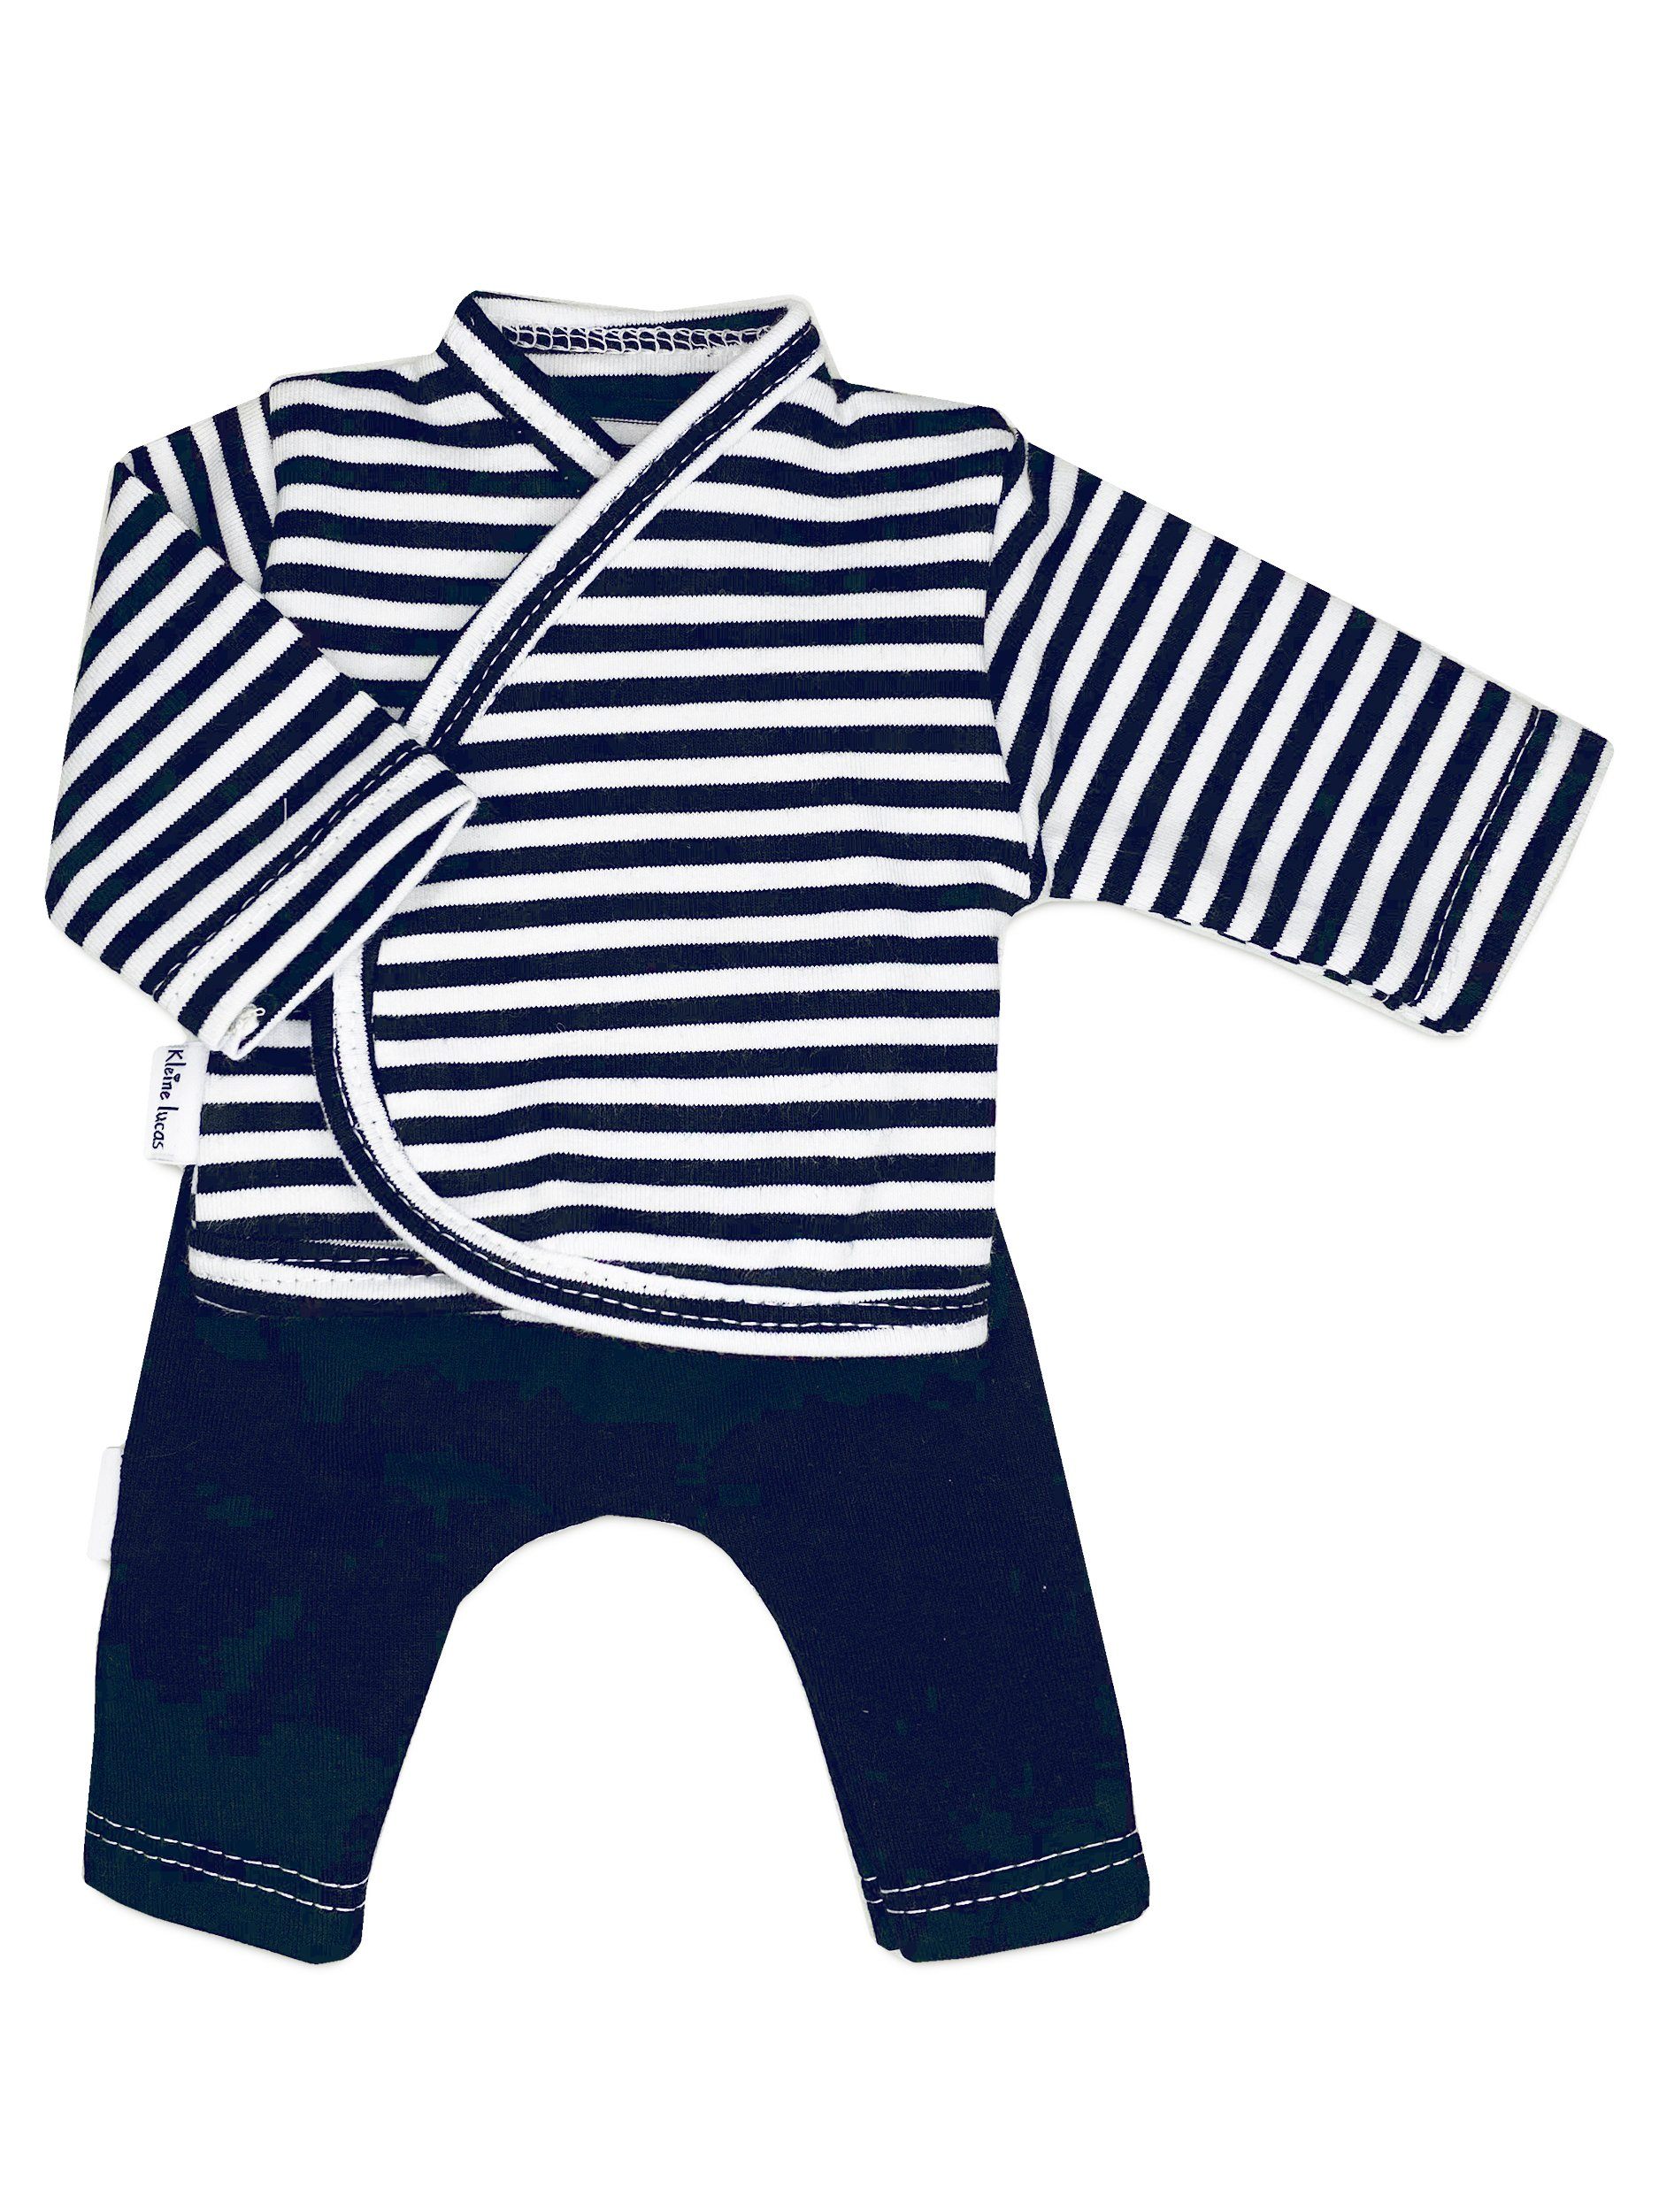 Top & Trouser Set, Navy & White Stripe Top & Trousers Little Lucas 